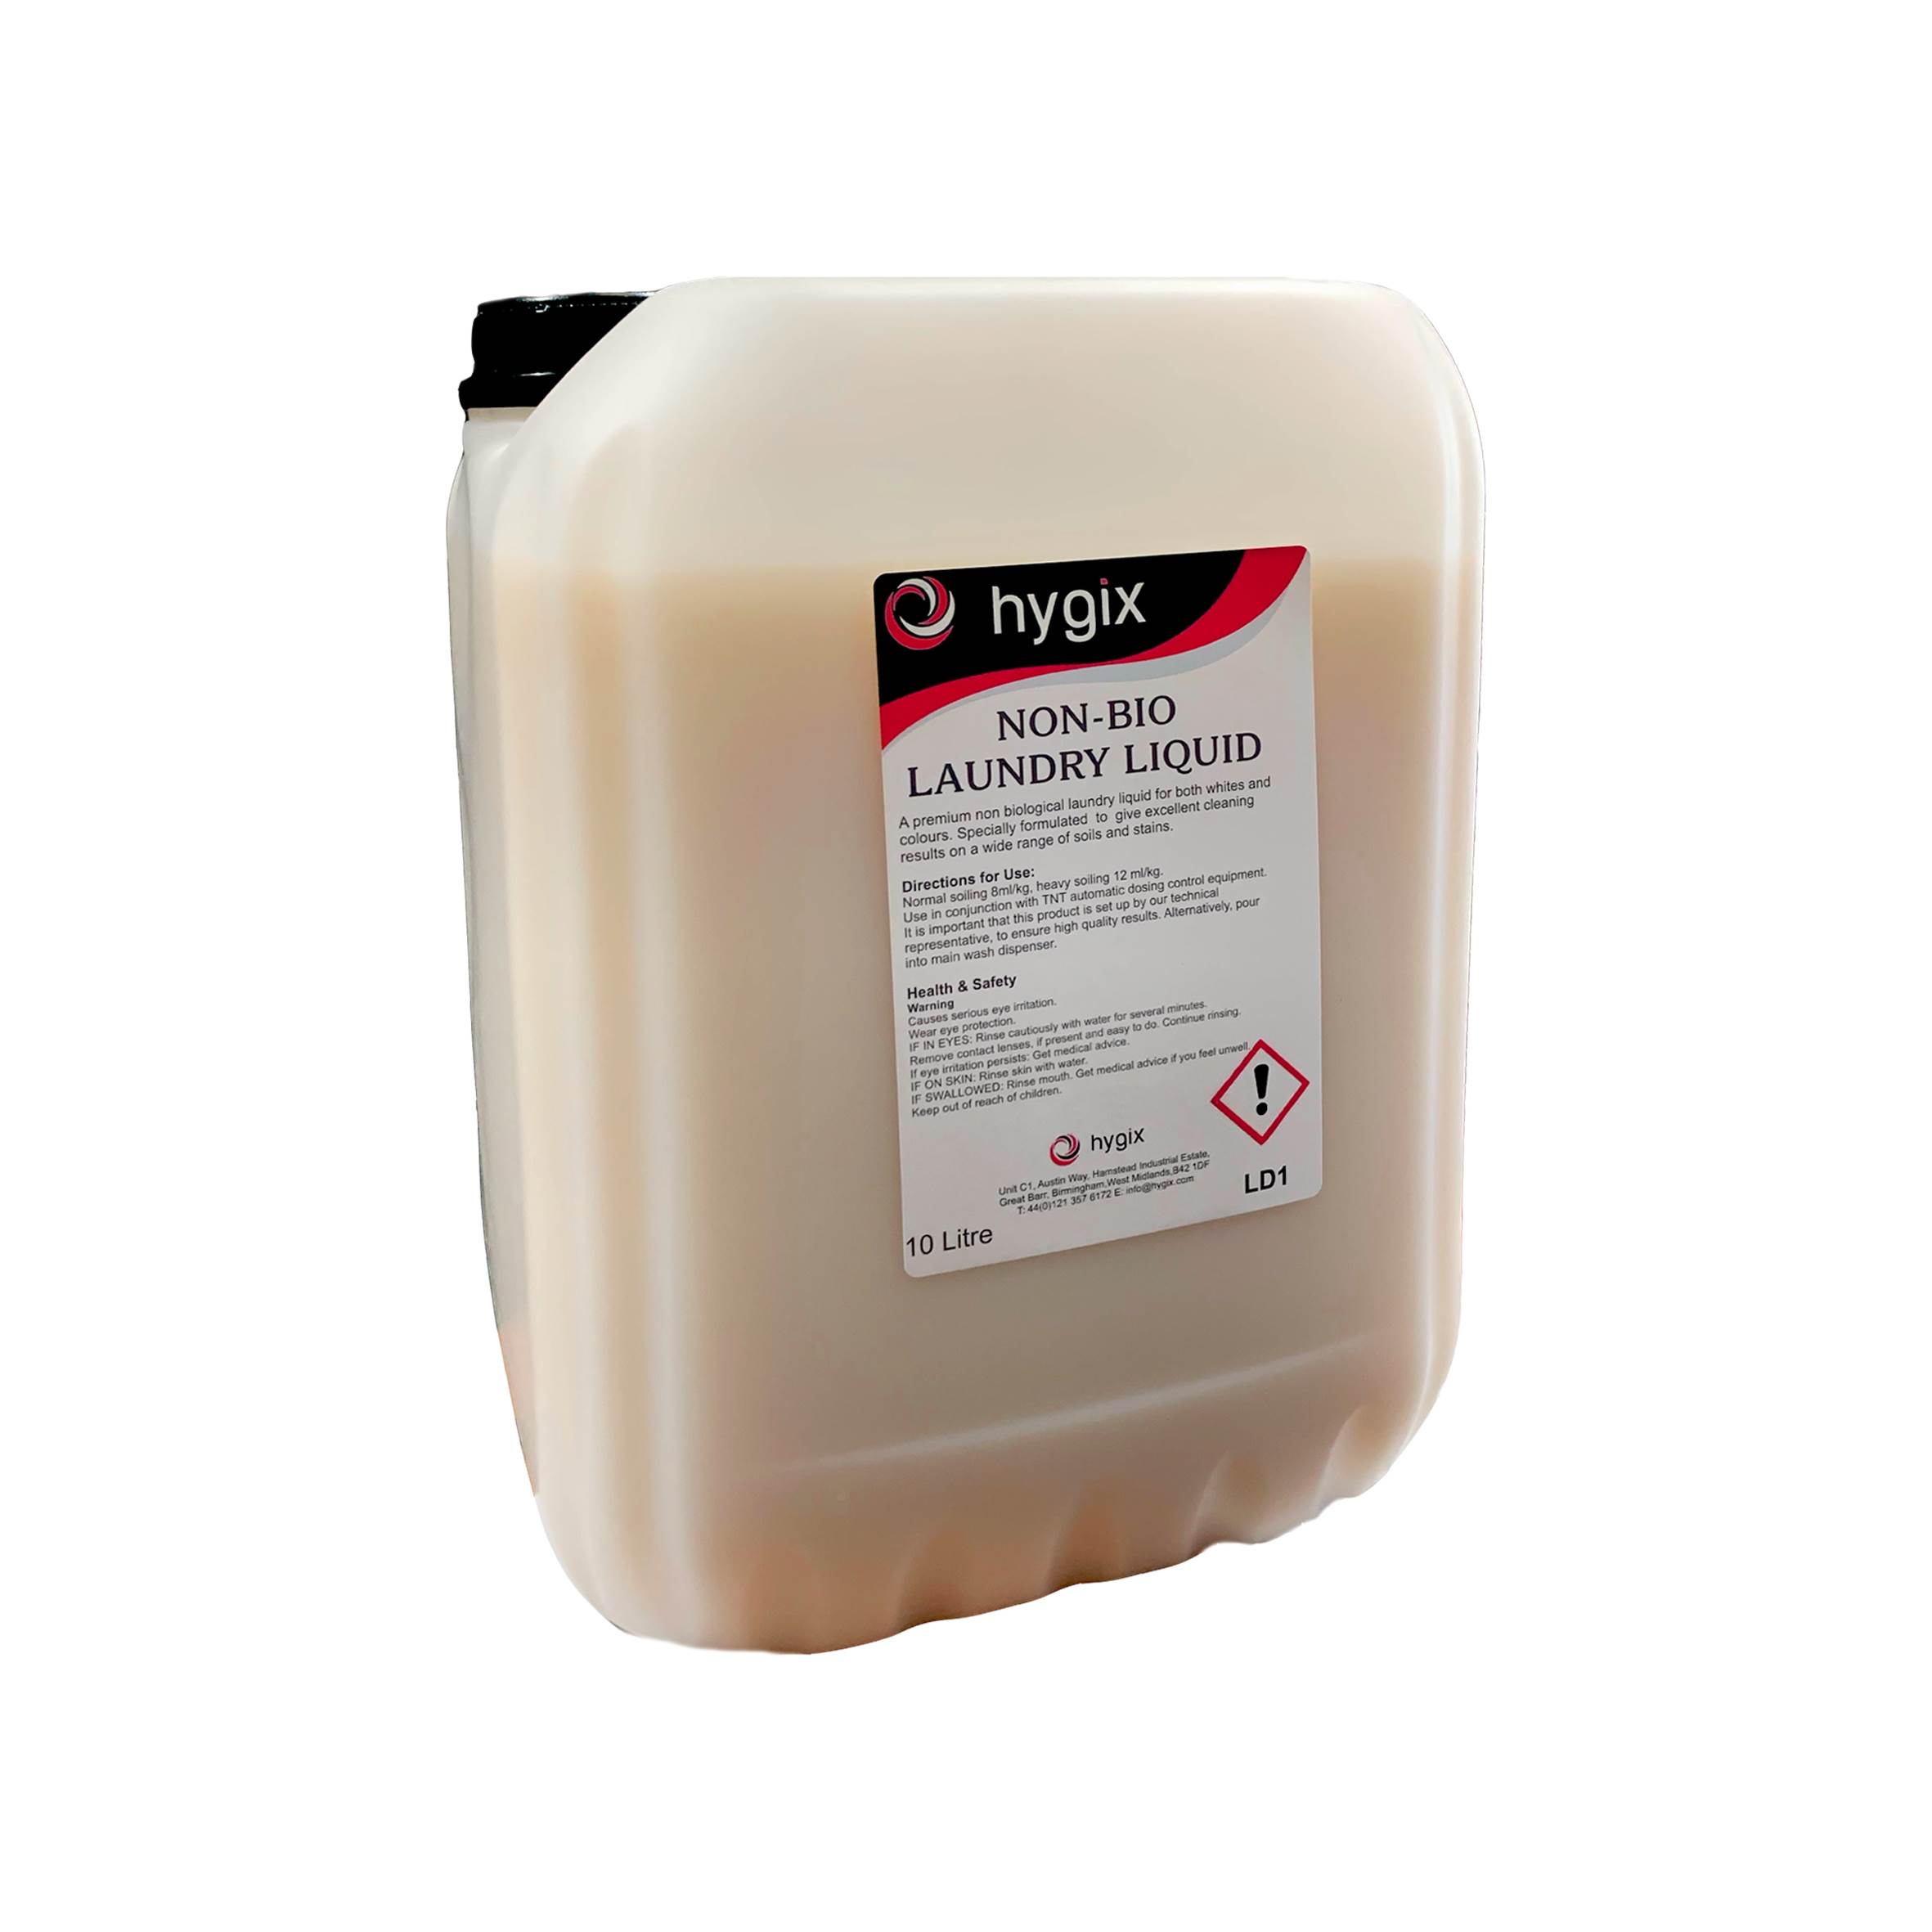 LD1 HYGIX NON-BIO LAUNDRY LIQUID 10 litre